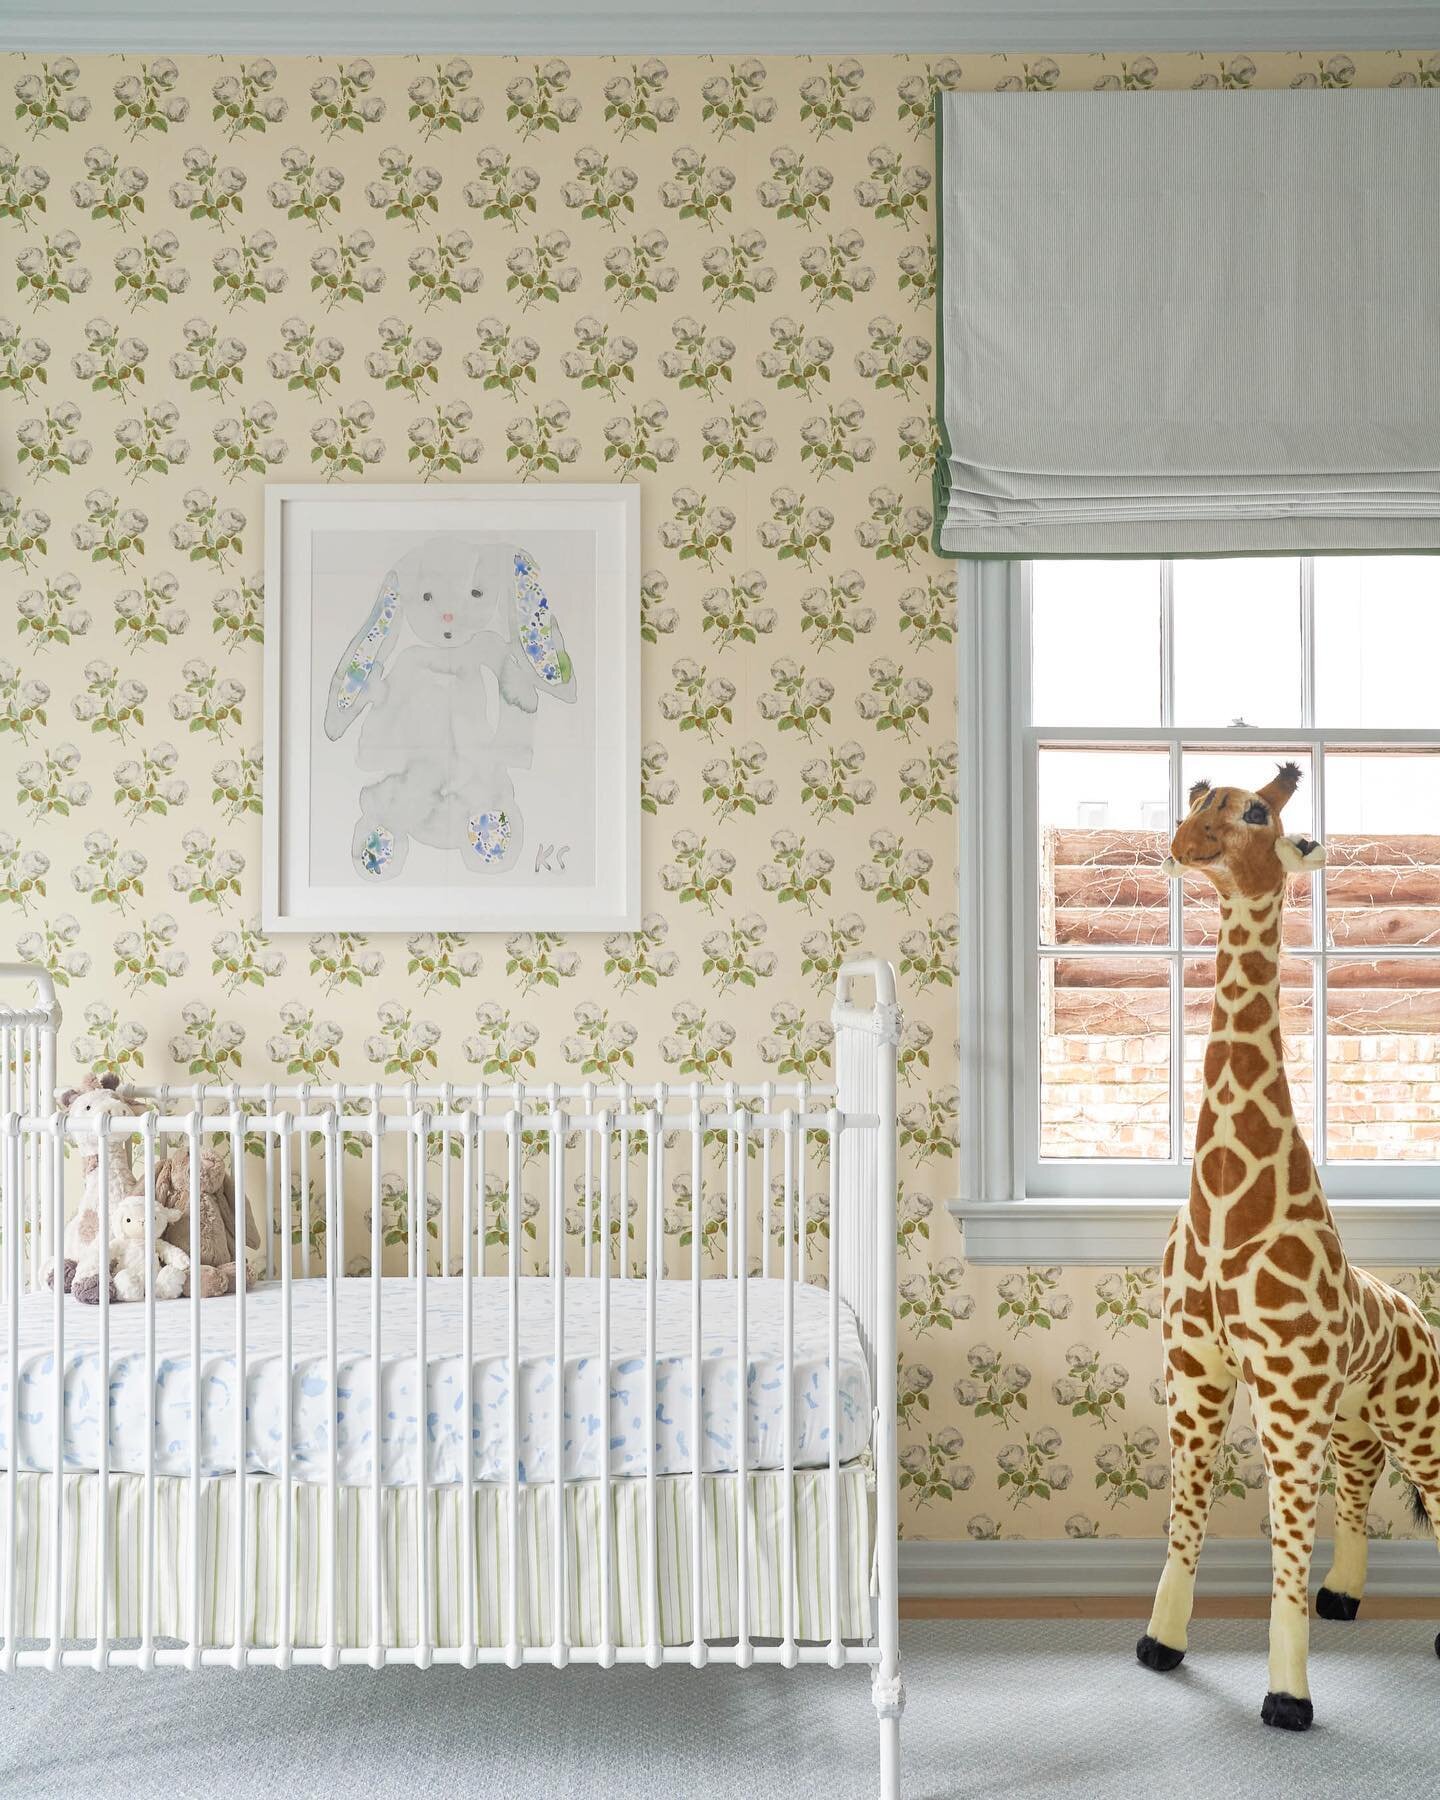 A tall order🦒
.
.
.
#madre #madredallas #design #interiordesign #colorplay #nursery #decor